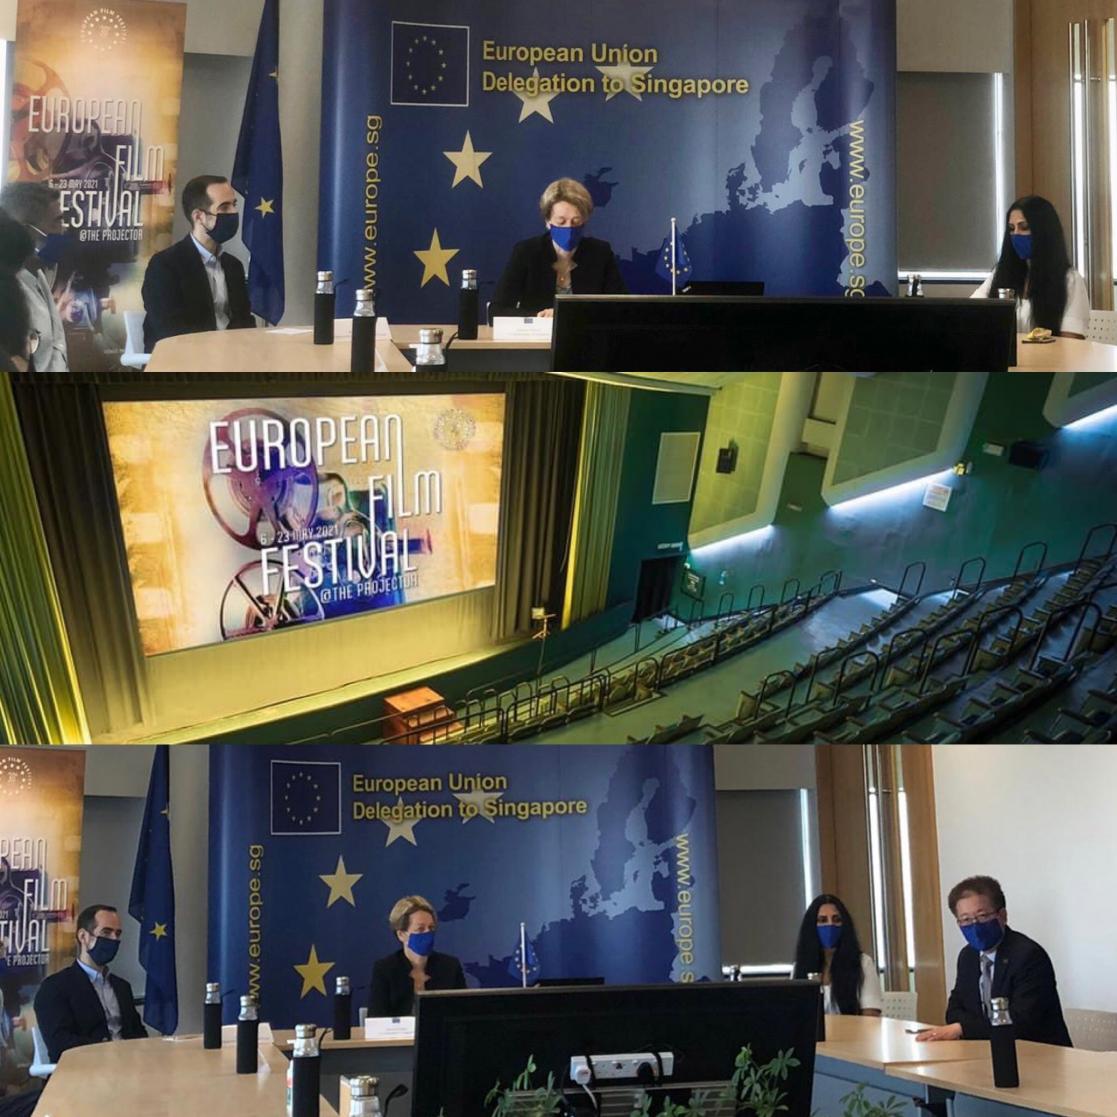 Media conference of the European Film Festival